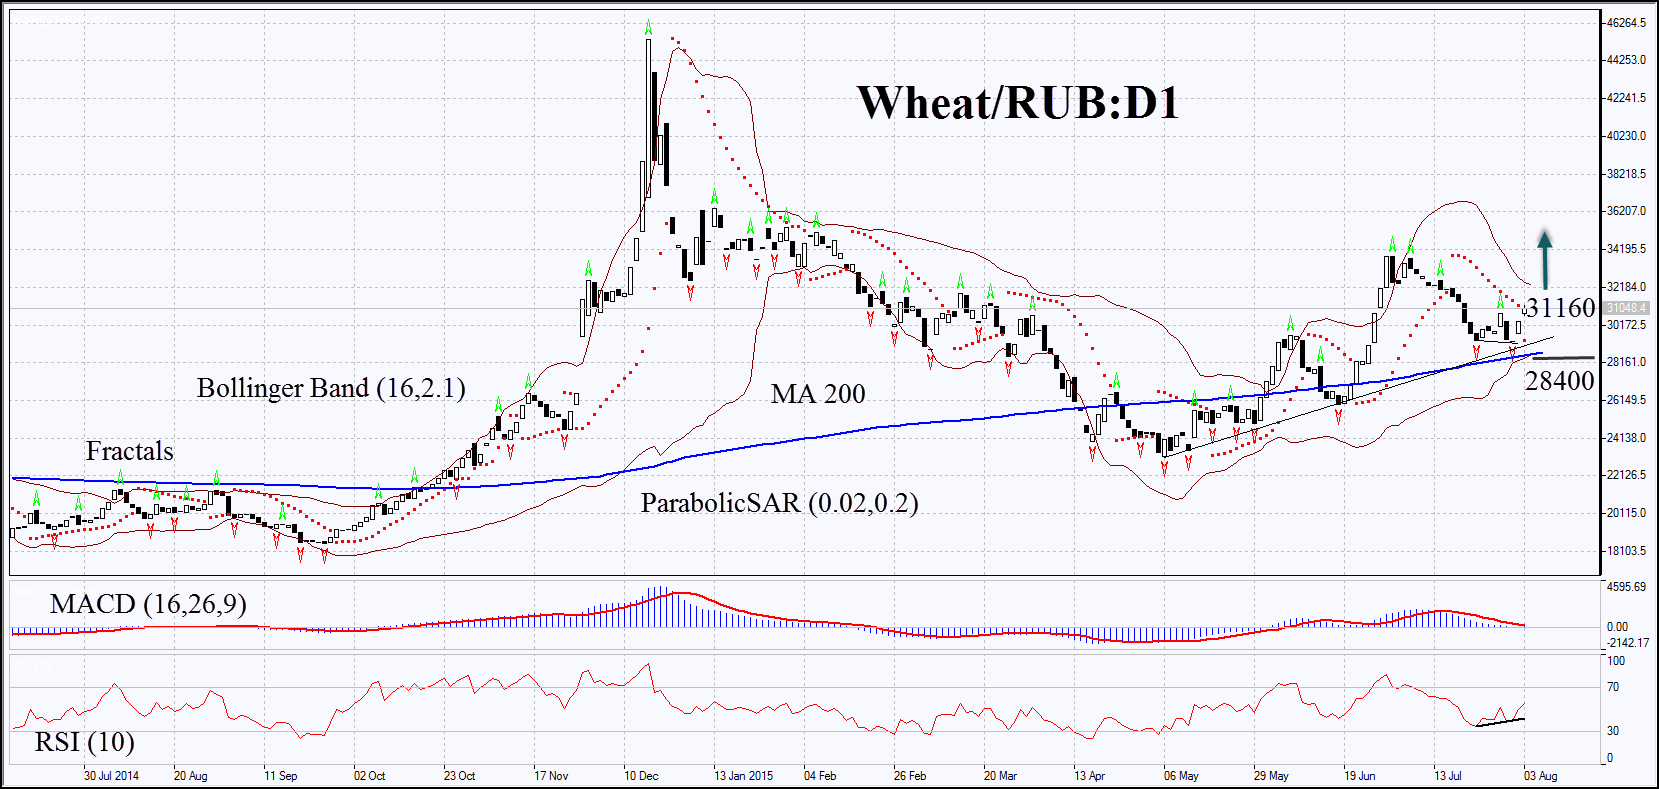 Wheat/RUB